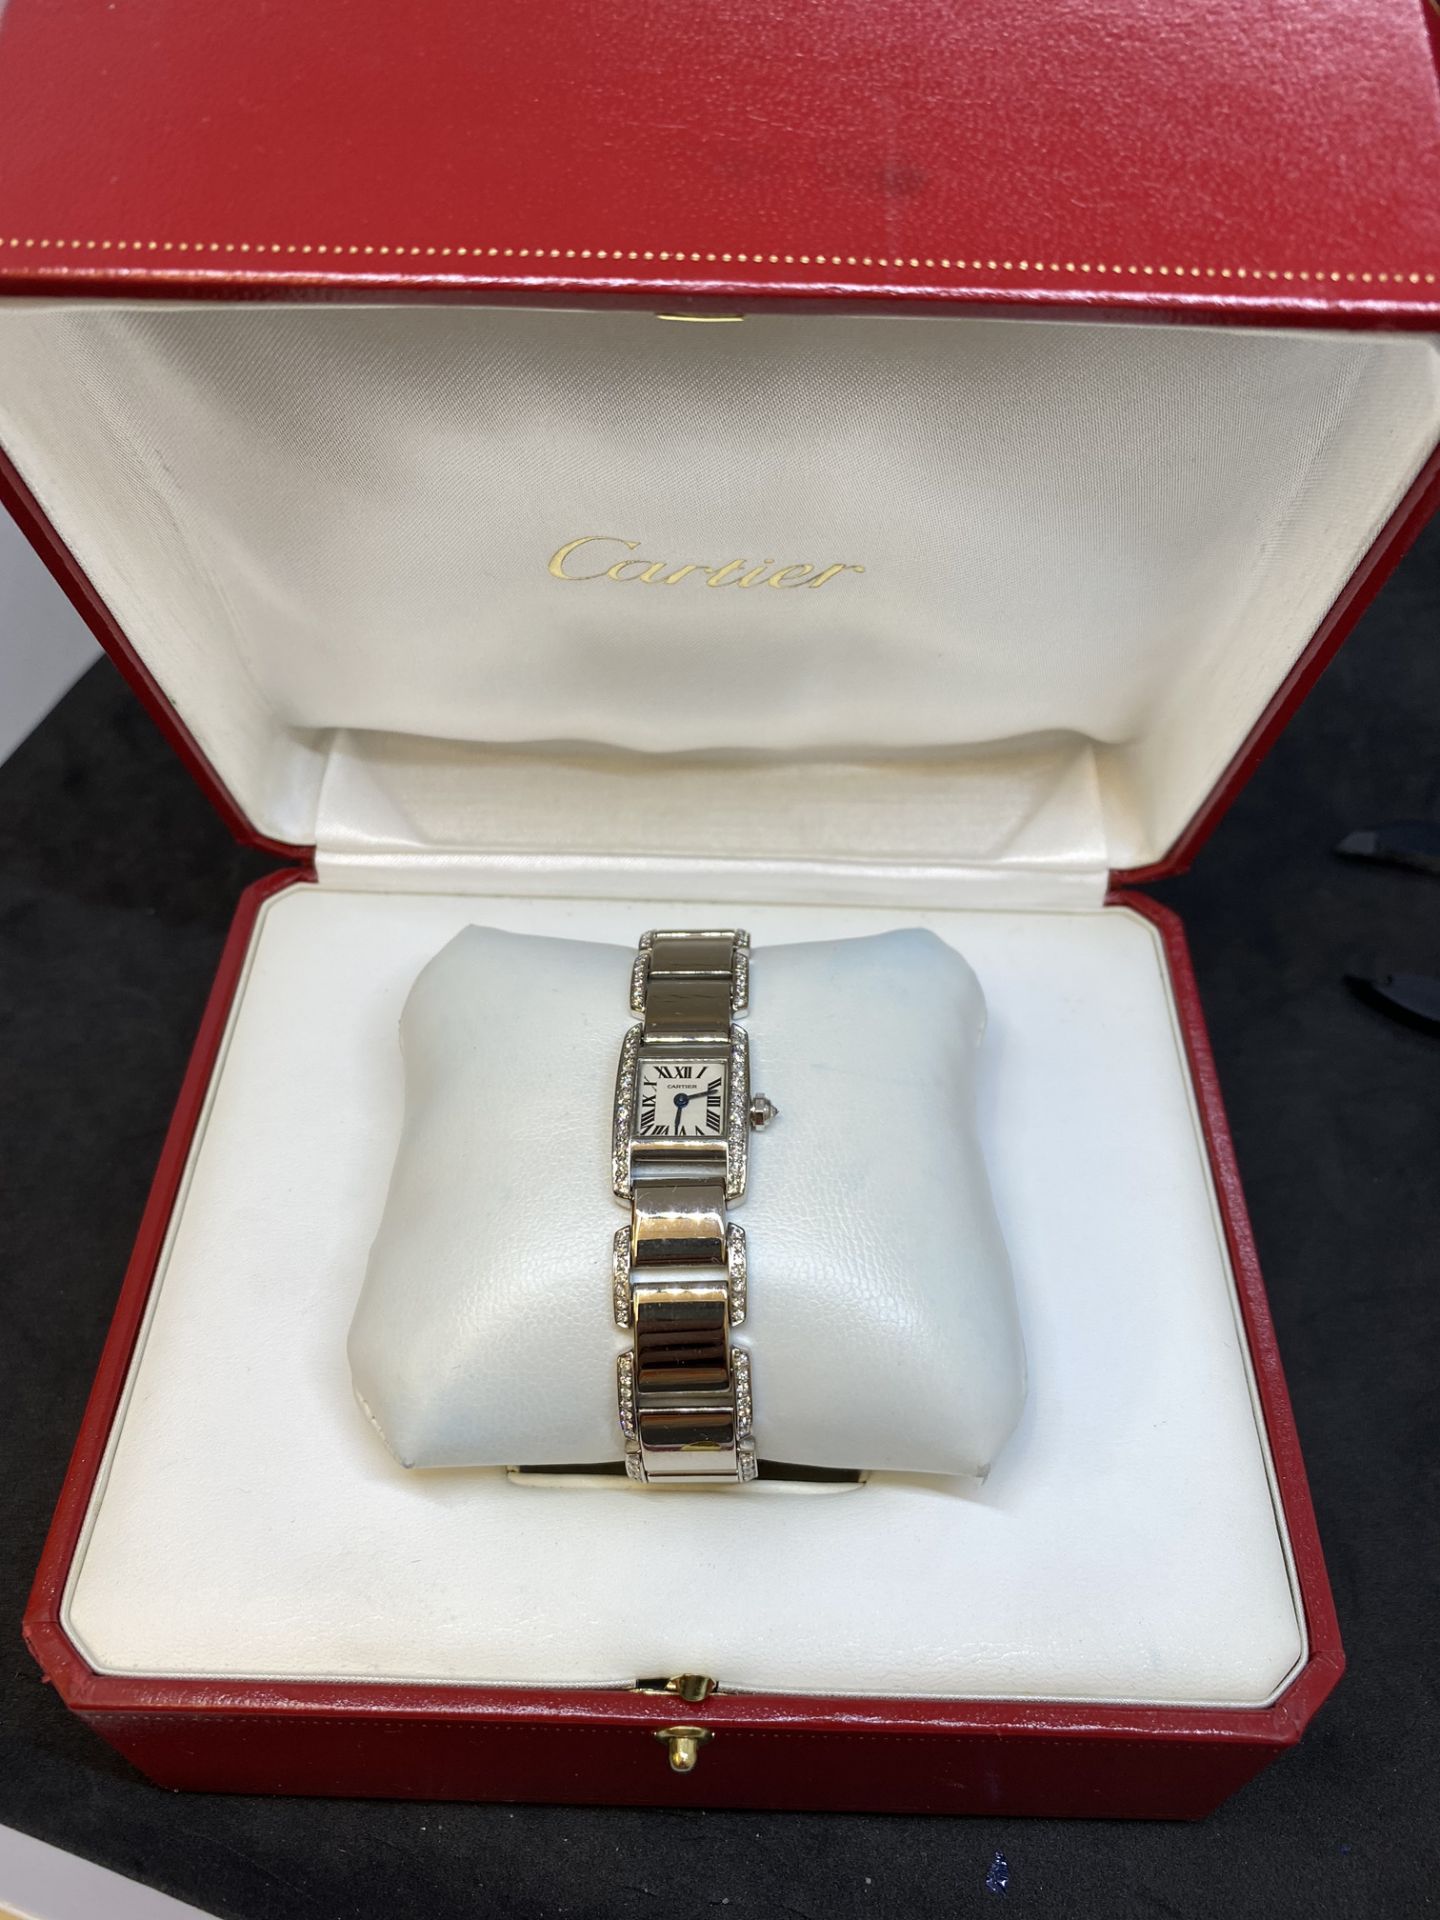 Diamond Set Cartier Tankissme 2831 - 18ct gold Ladies Watch - 95 grams - With Box